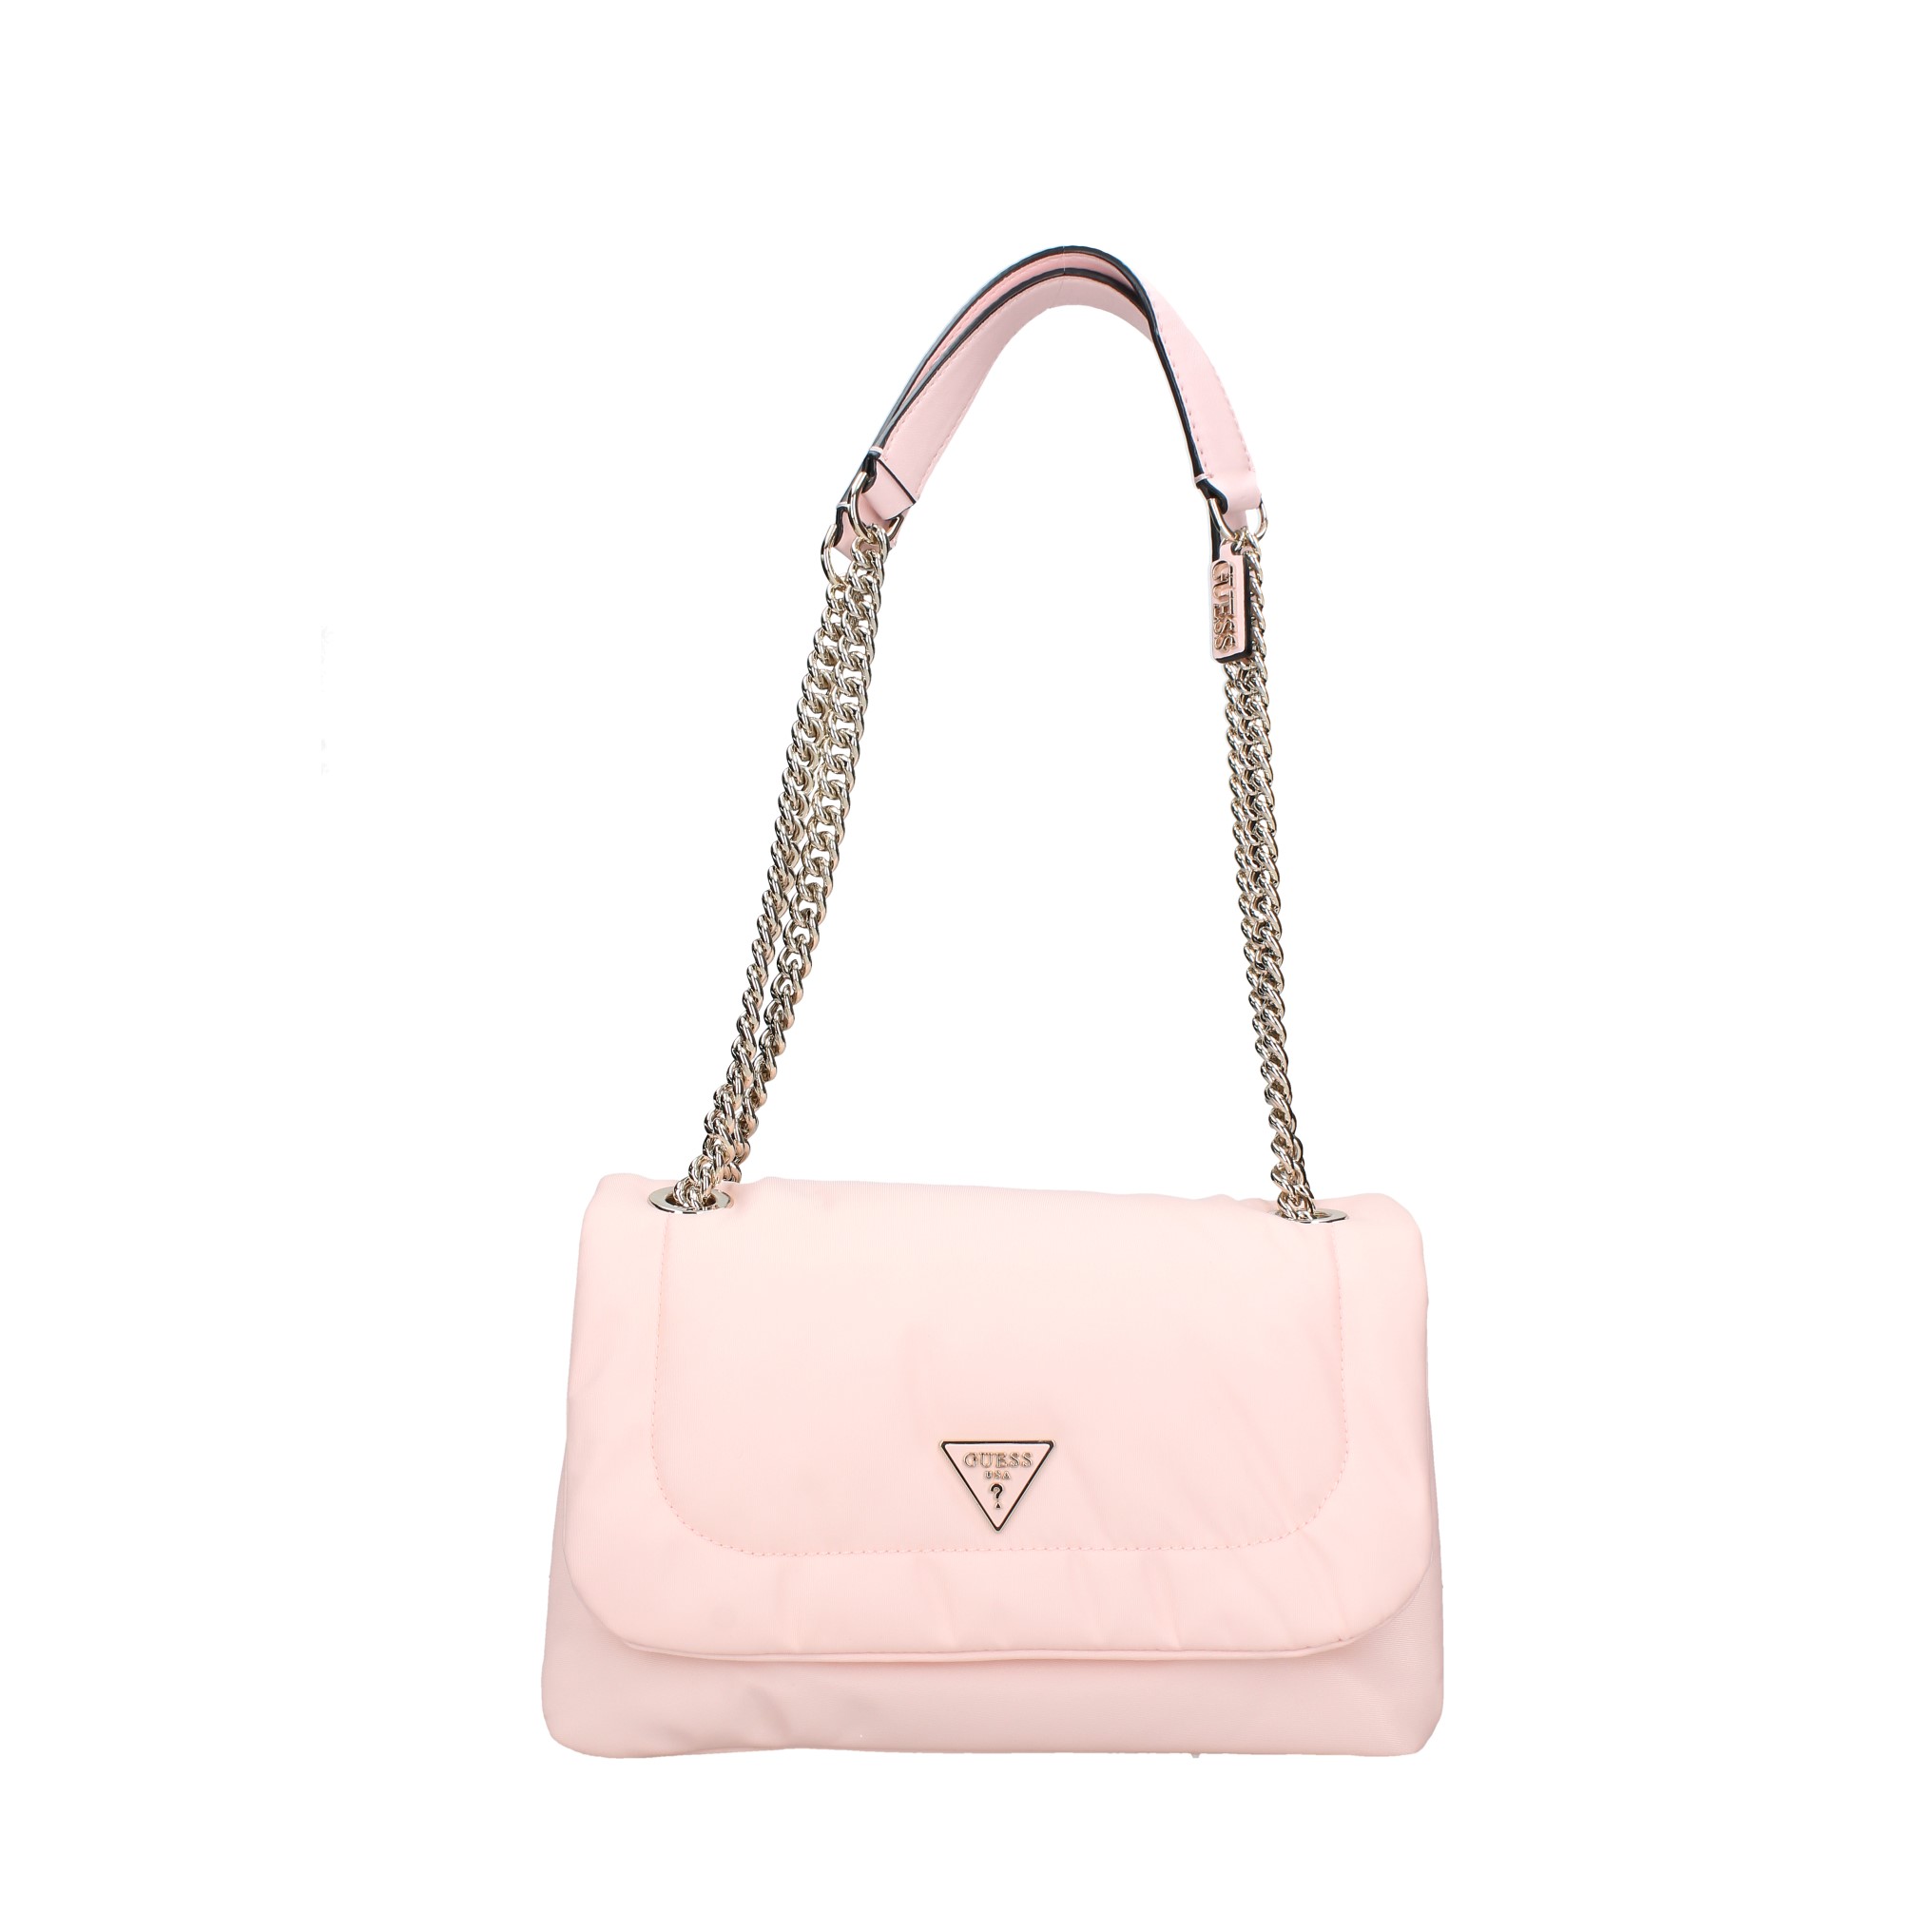 Shoulder bags Pink - GUESS - Ginevra calzature